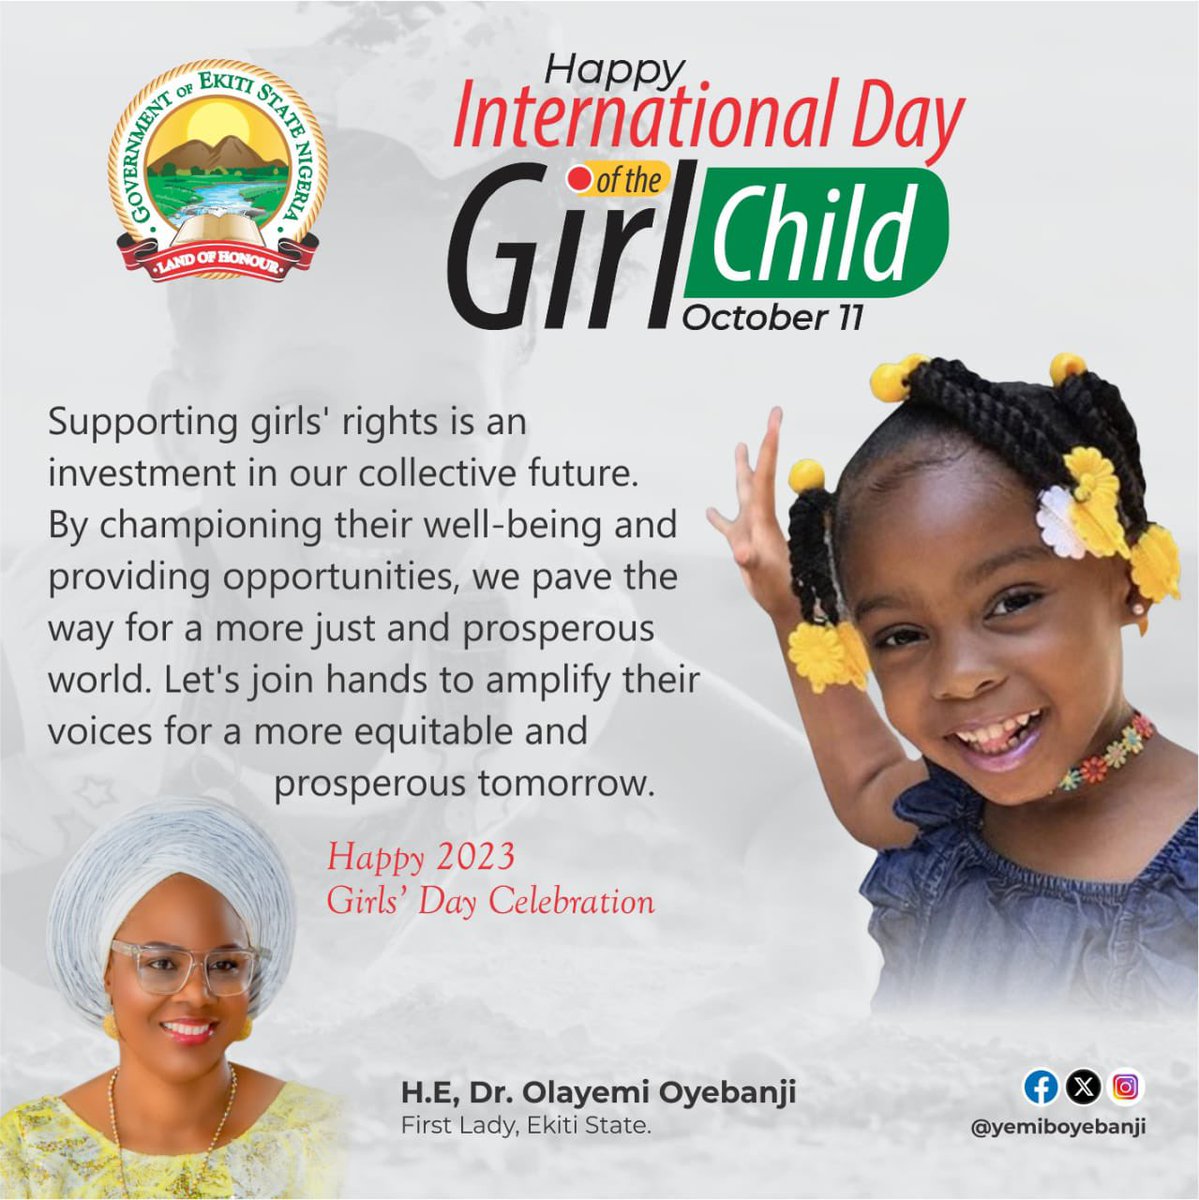 Today is for the Girl Child 🎊🎊🎊

#InternationalDayoftheGirlChild